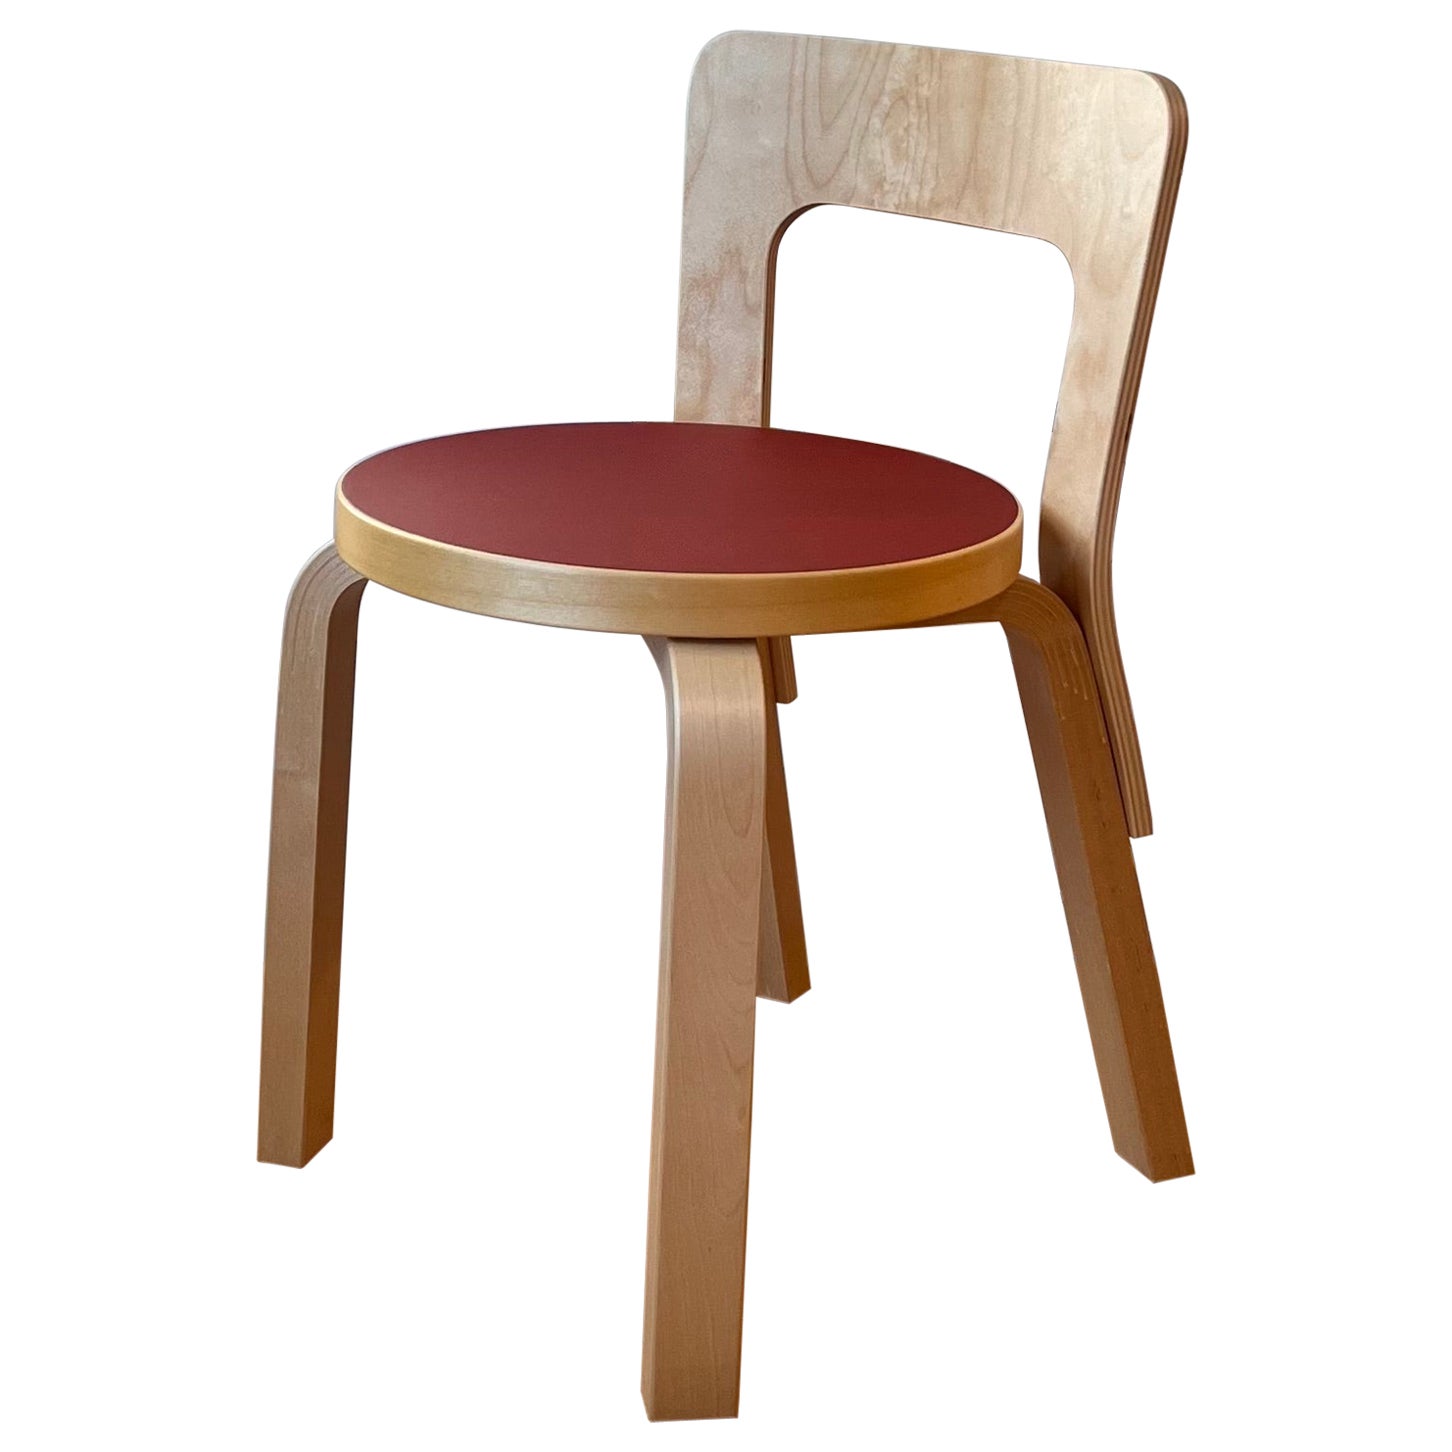 (New Old Stock) Chair N65 by Alvar Aalto for Artek (Red Linoleum)